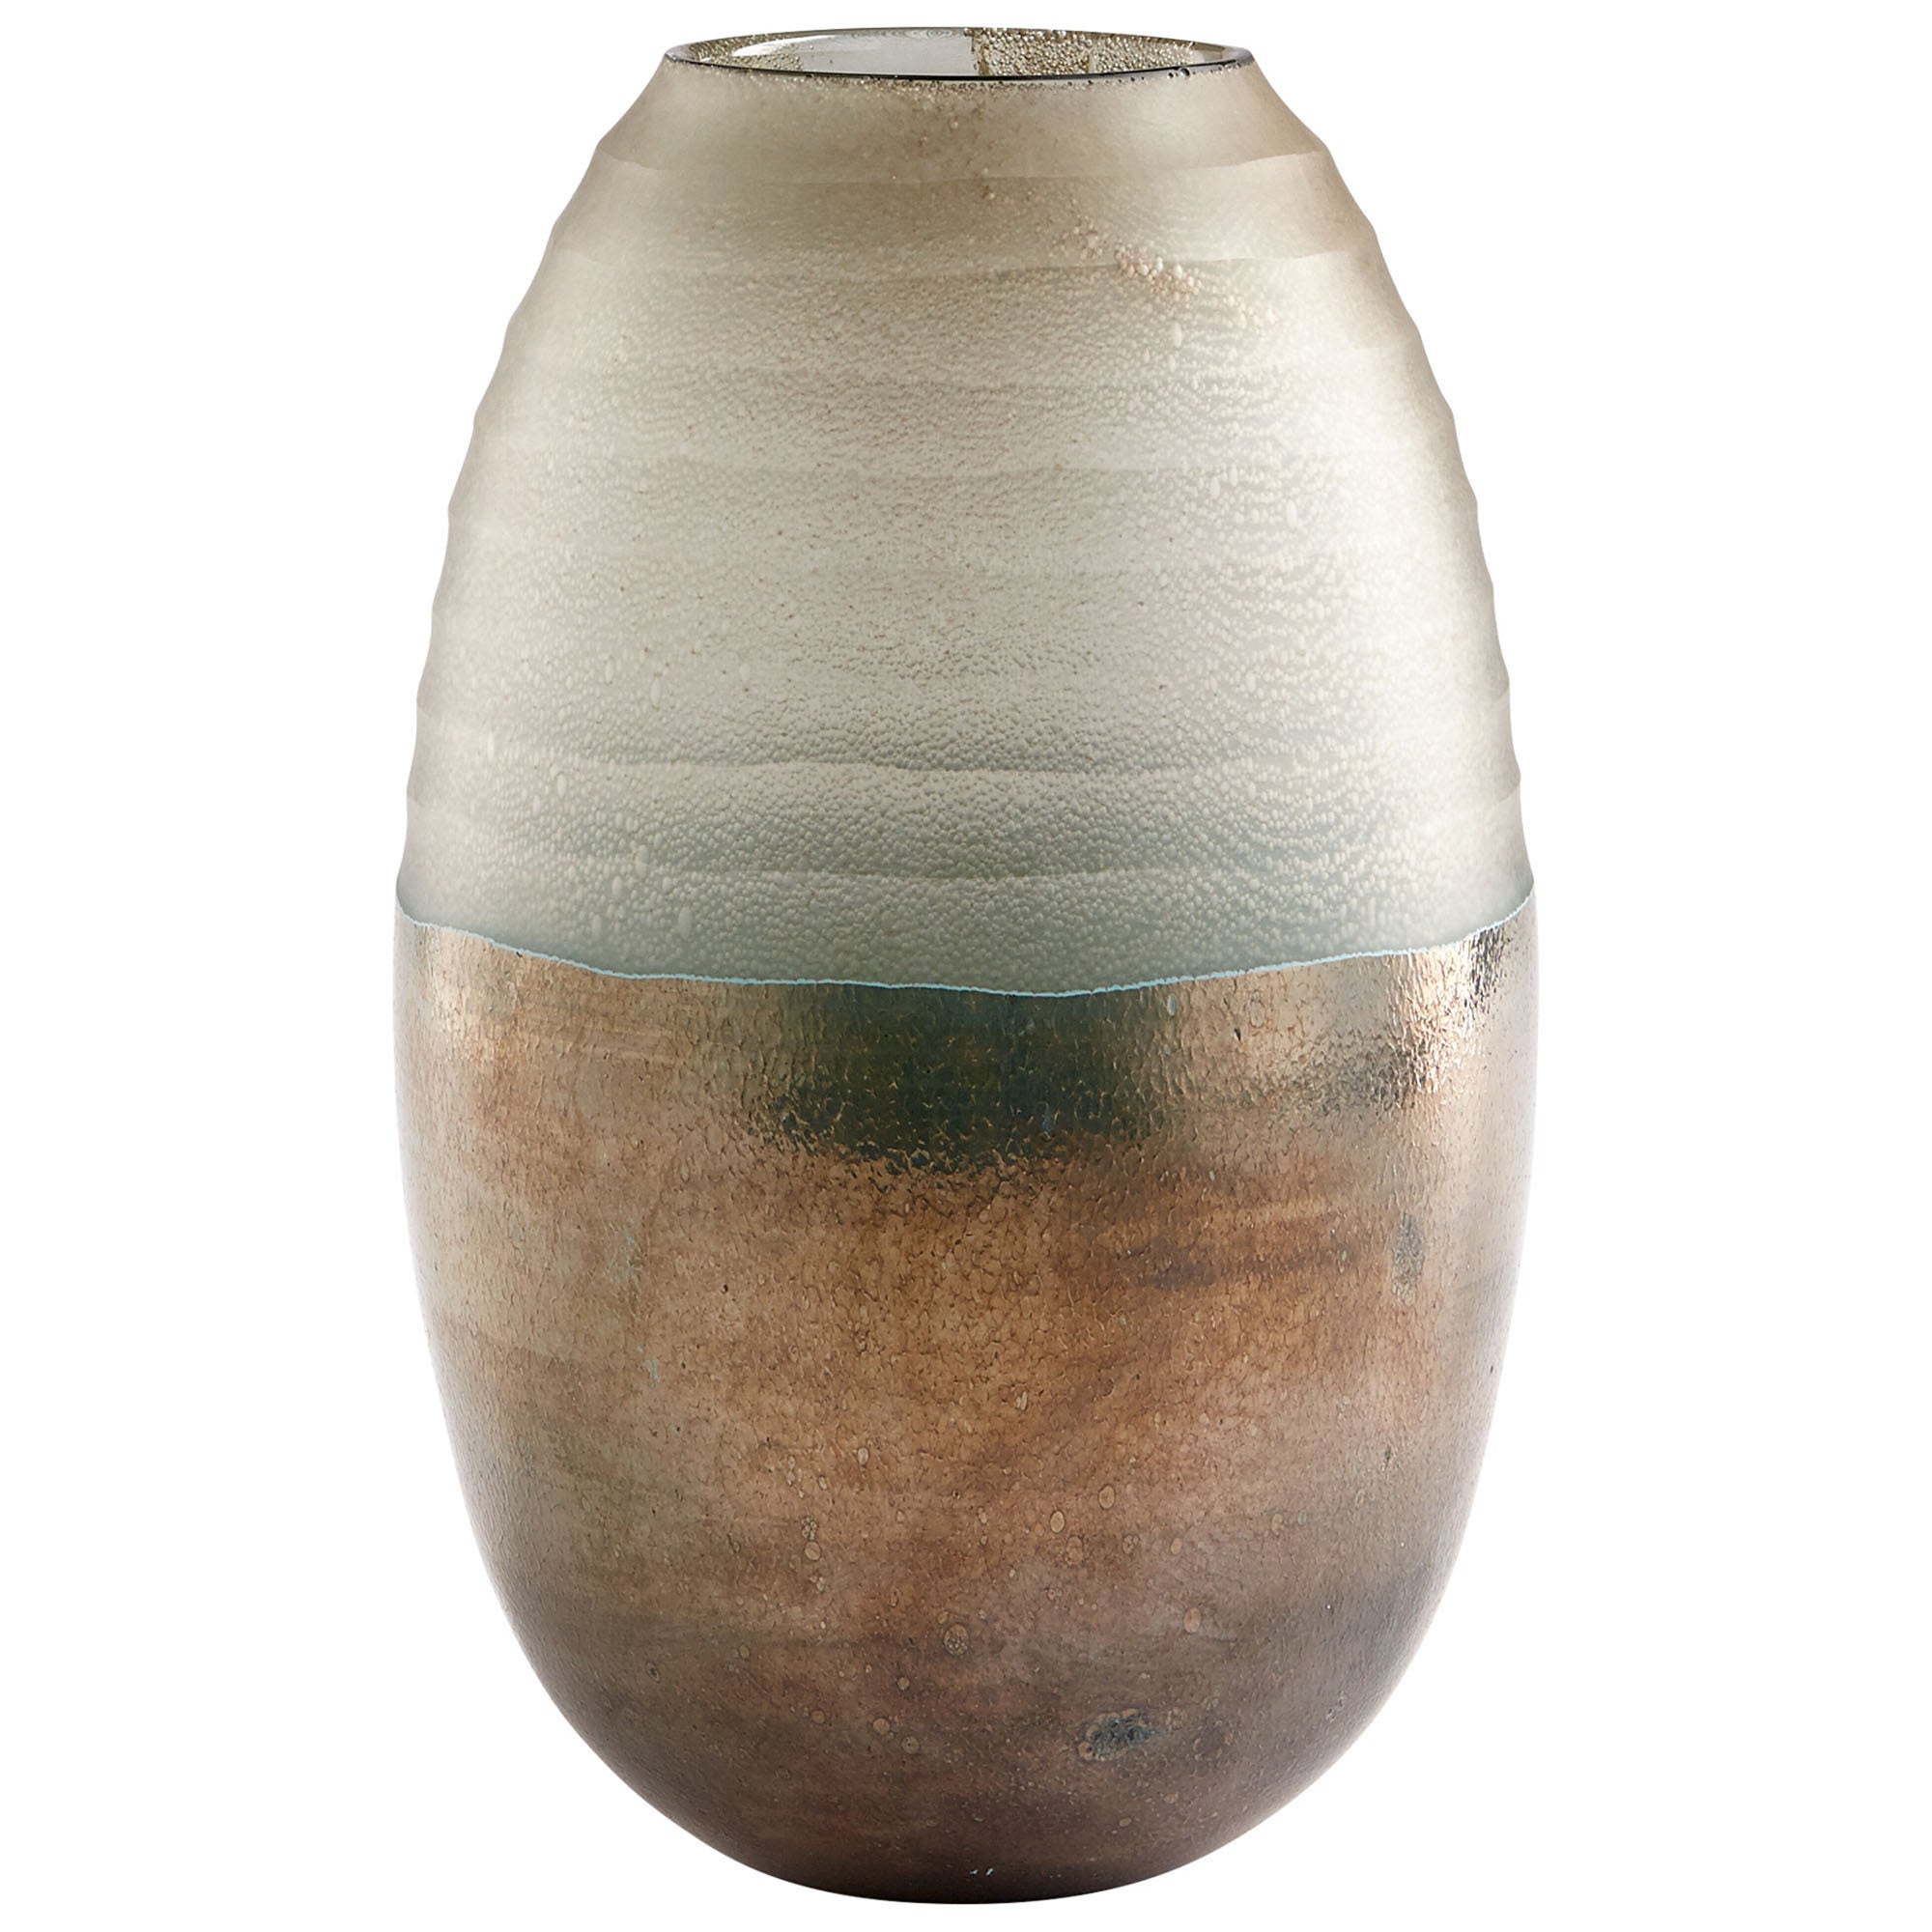 Cyan Design 07800 Candice Vase,Small